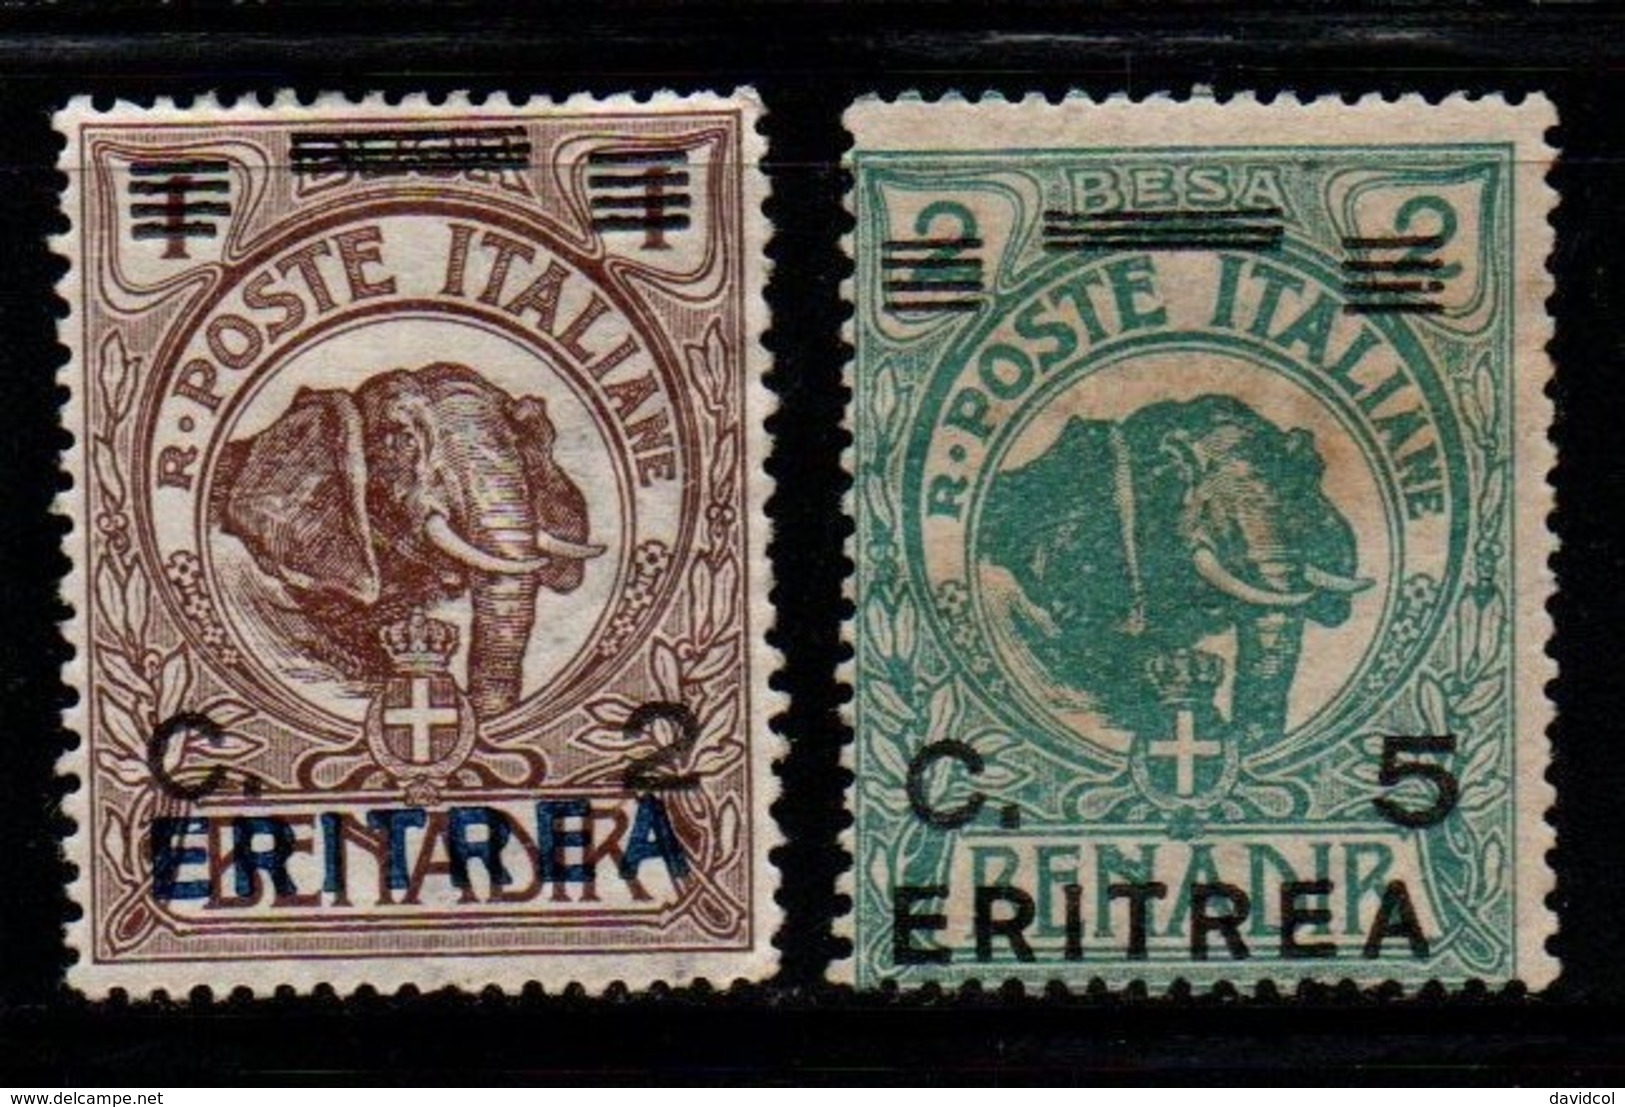 S211.-. ERITREA - 1922 - SC#: 58,59 - MINT - OVERPRINTED / SURCHARGED - Eritrea